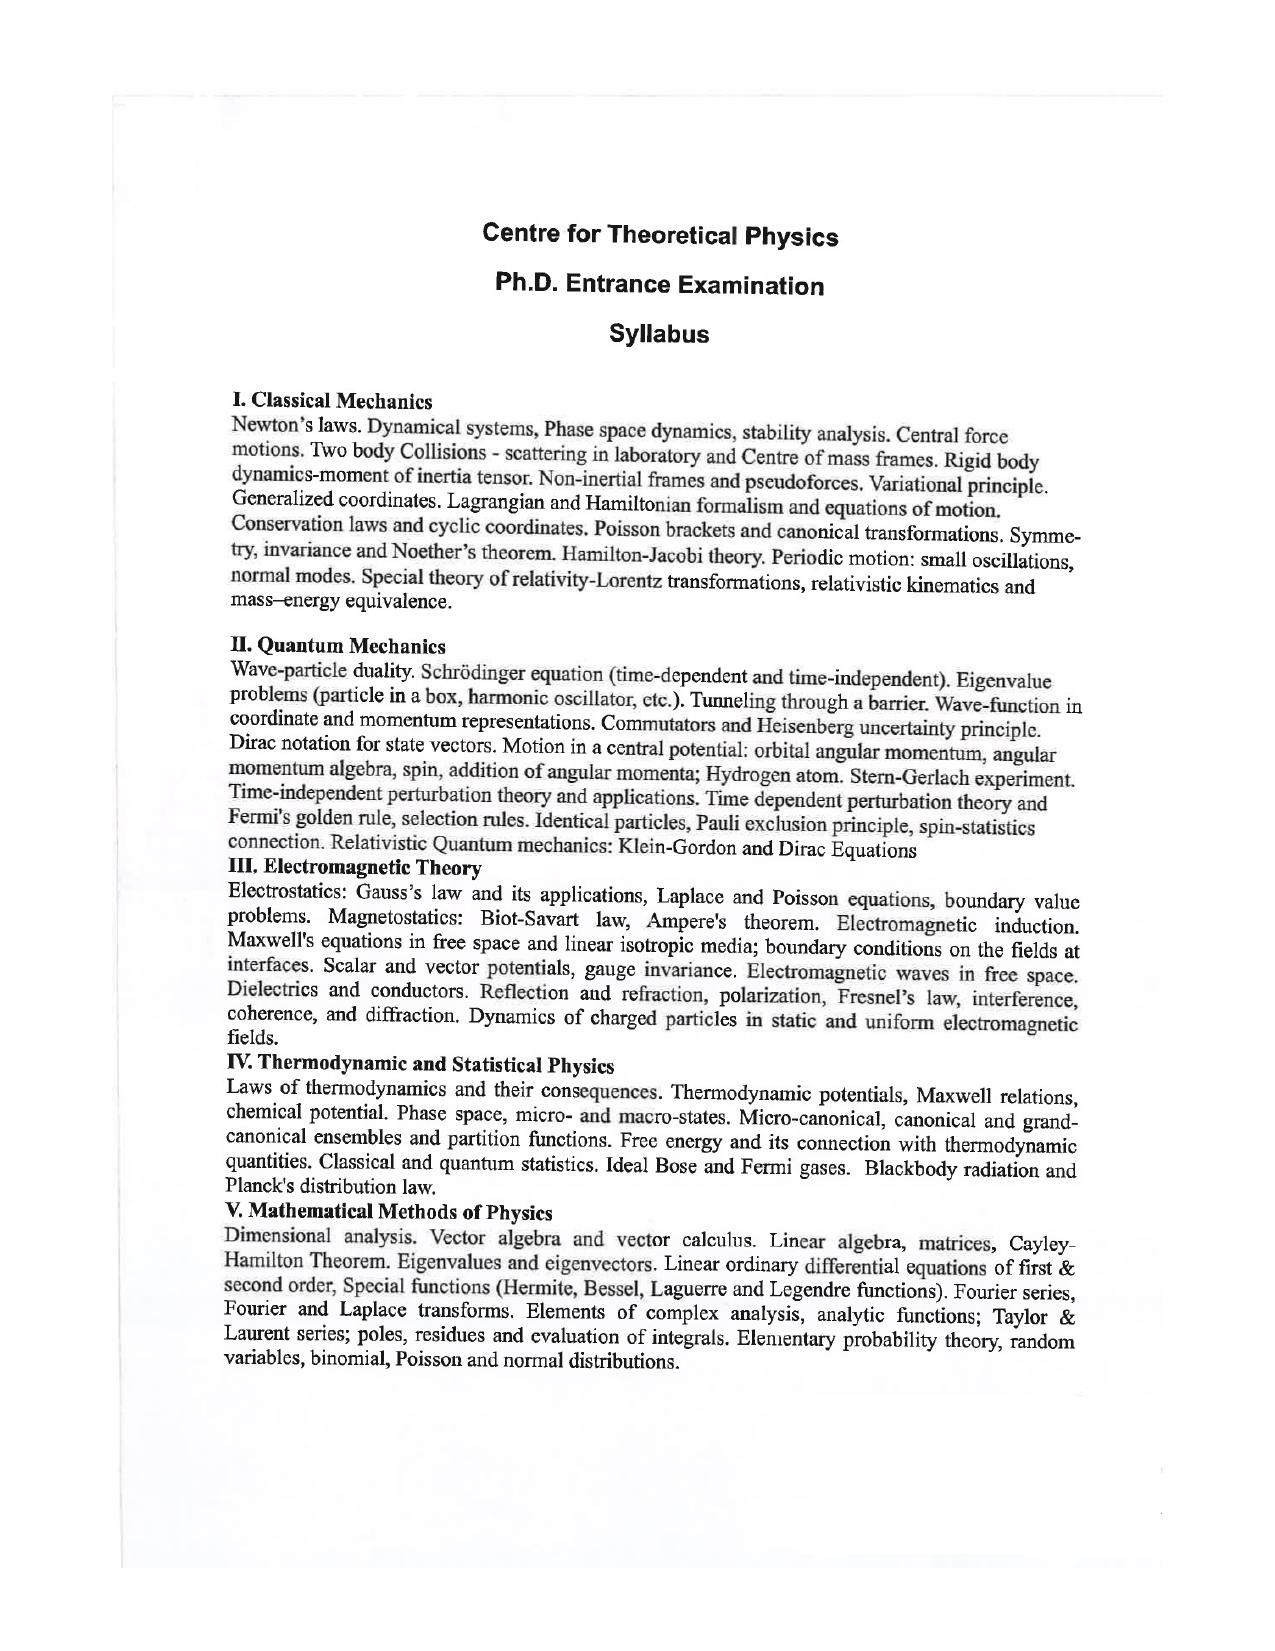 JMI Entrance Exam FACULTY OF NATURAL SCIENCES Syllabus - Page 40